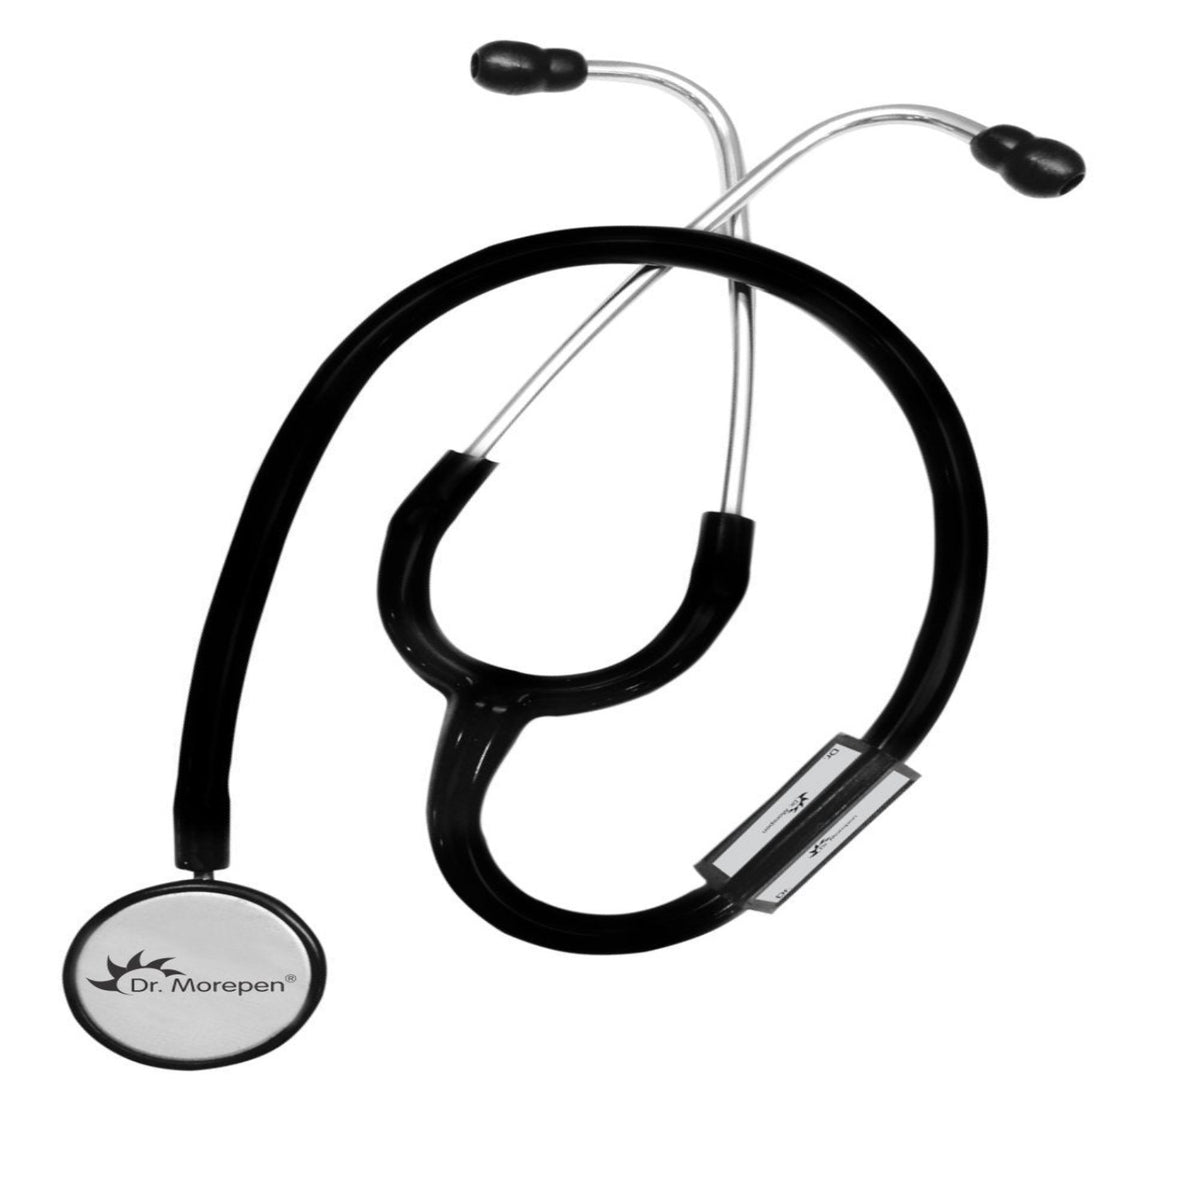 Dr Morepen The Professional's Cardiac Stethoscope ST 05 Stethoscope  (Black)